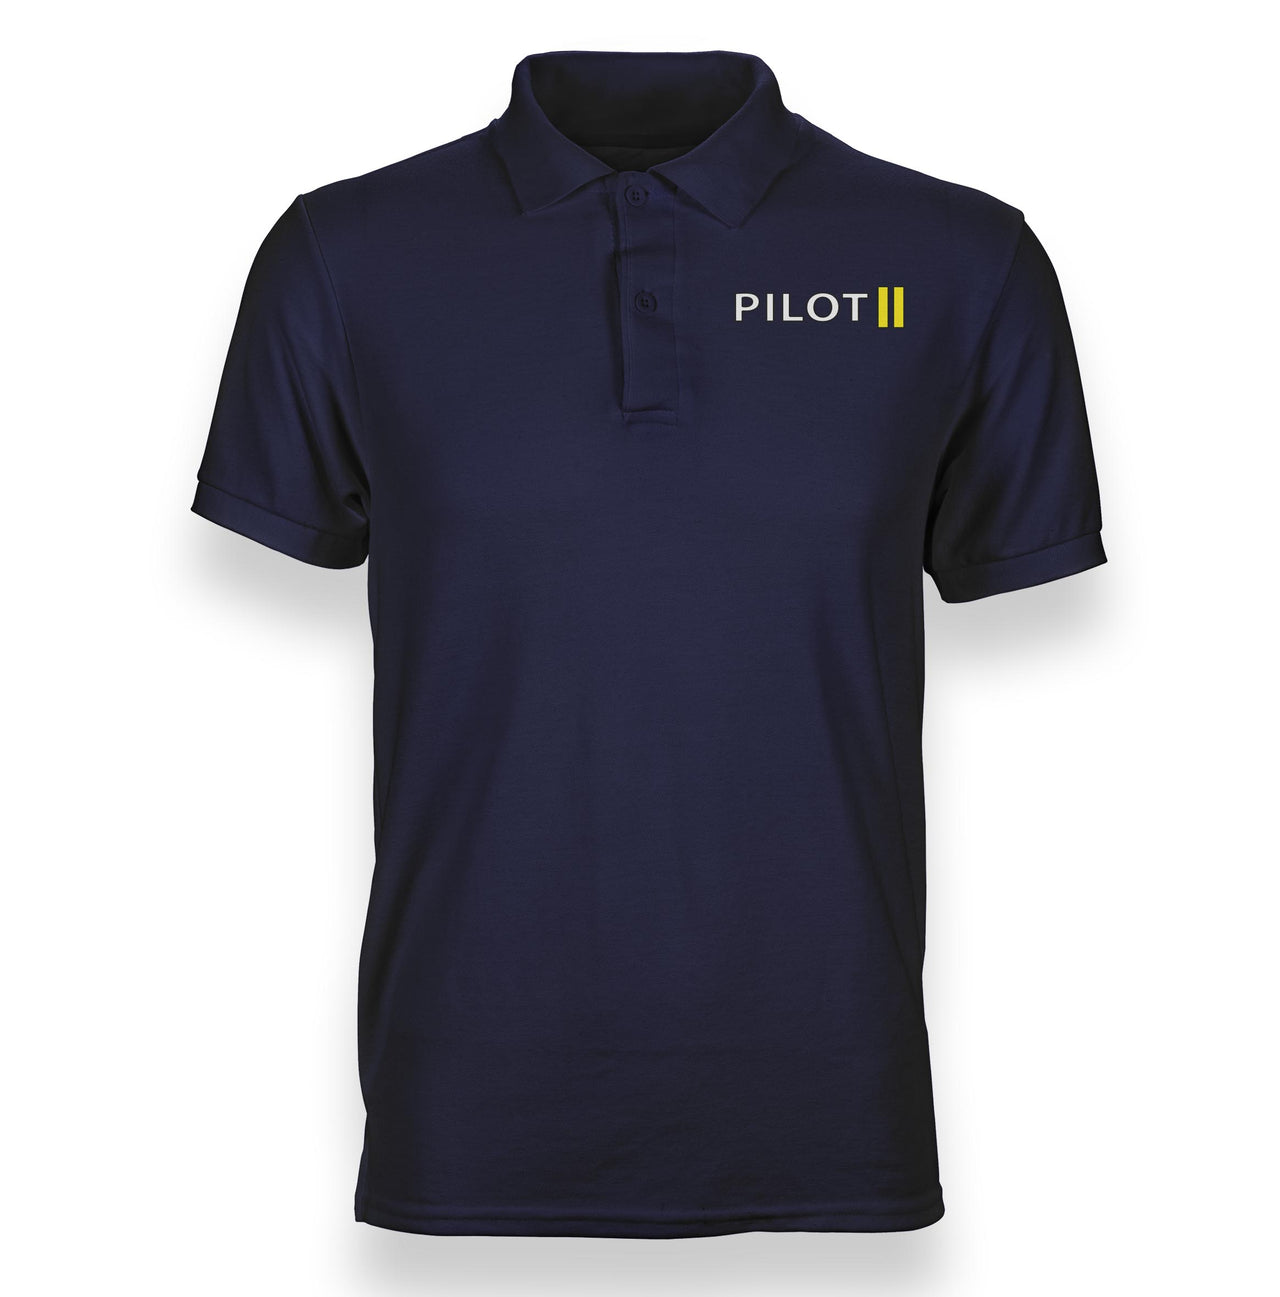 Pilot & Stripes (2 Lines) Designed Polo T-Shirts